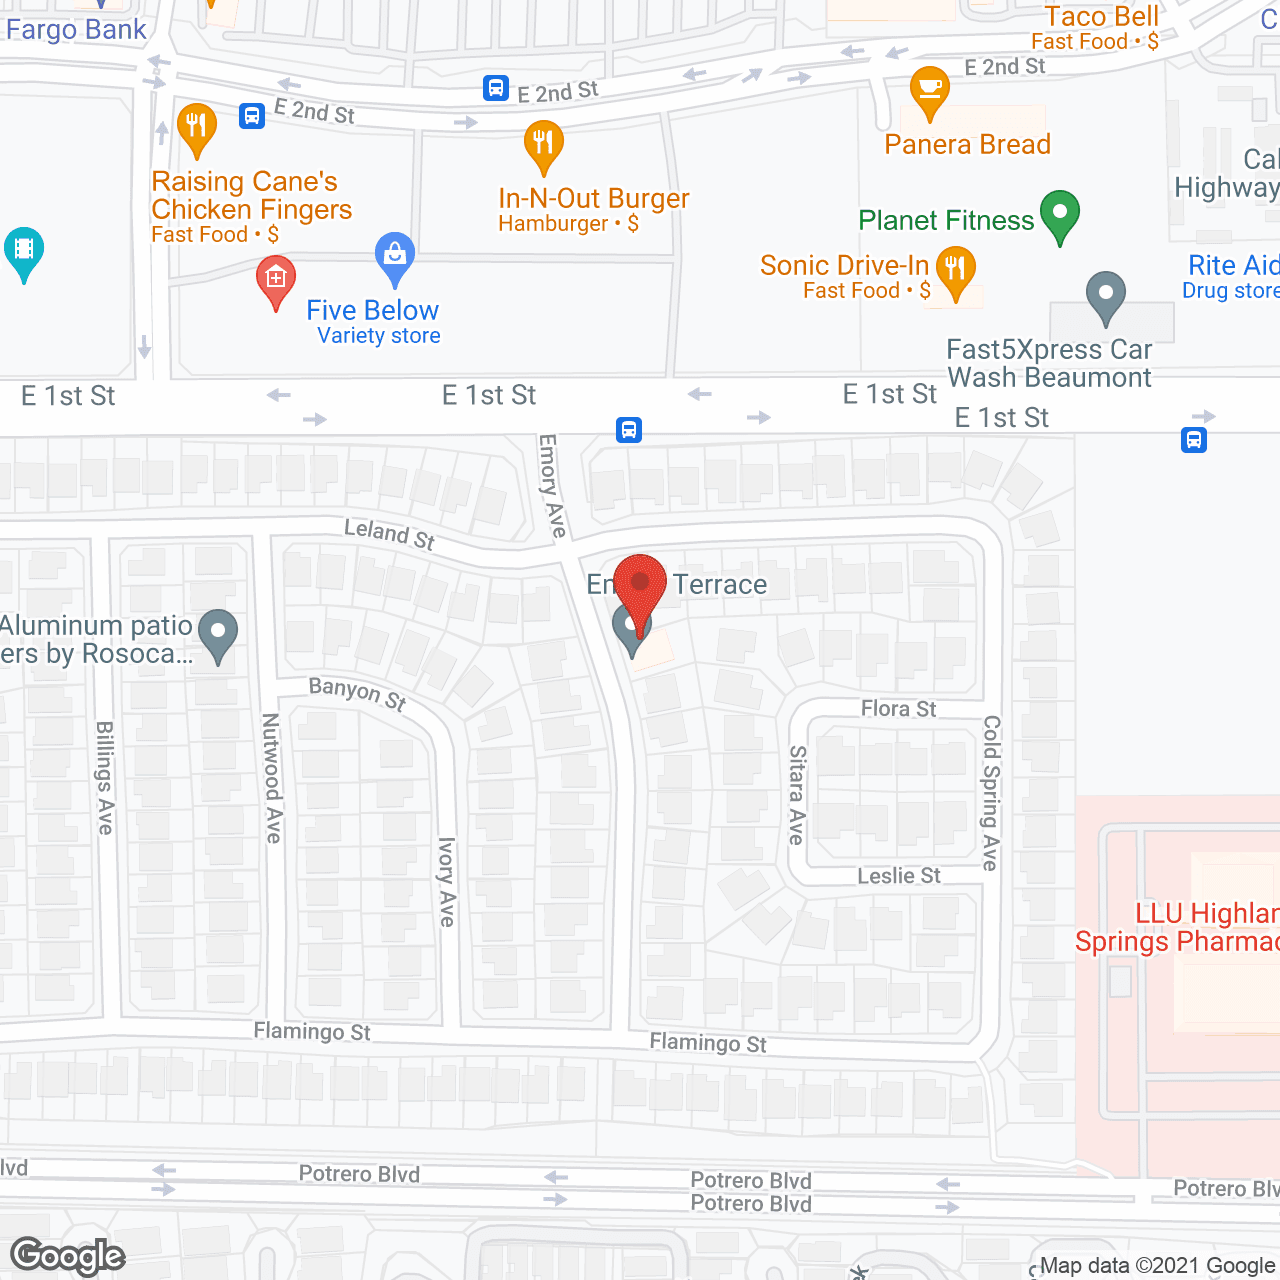 Emory Terrace in google map